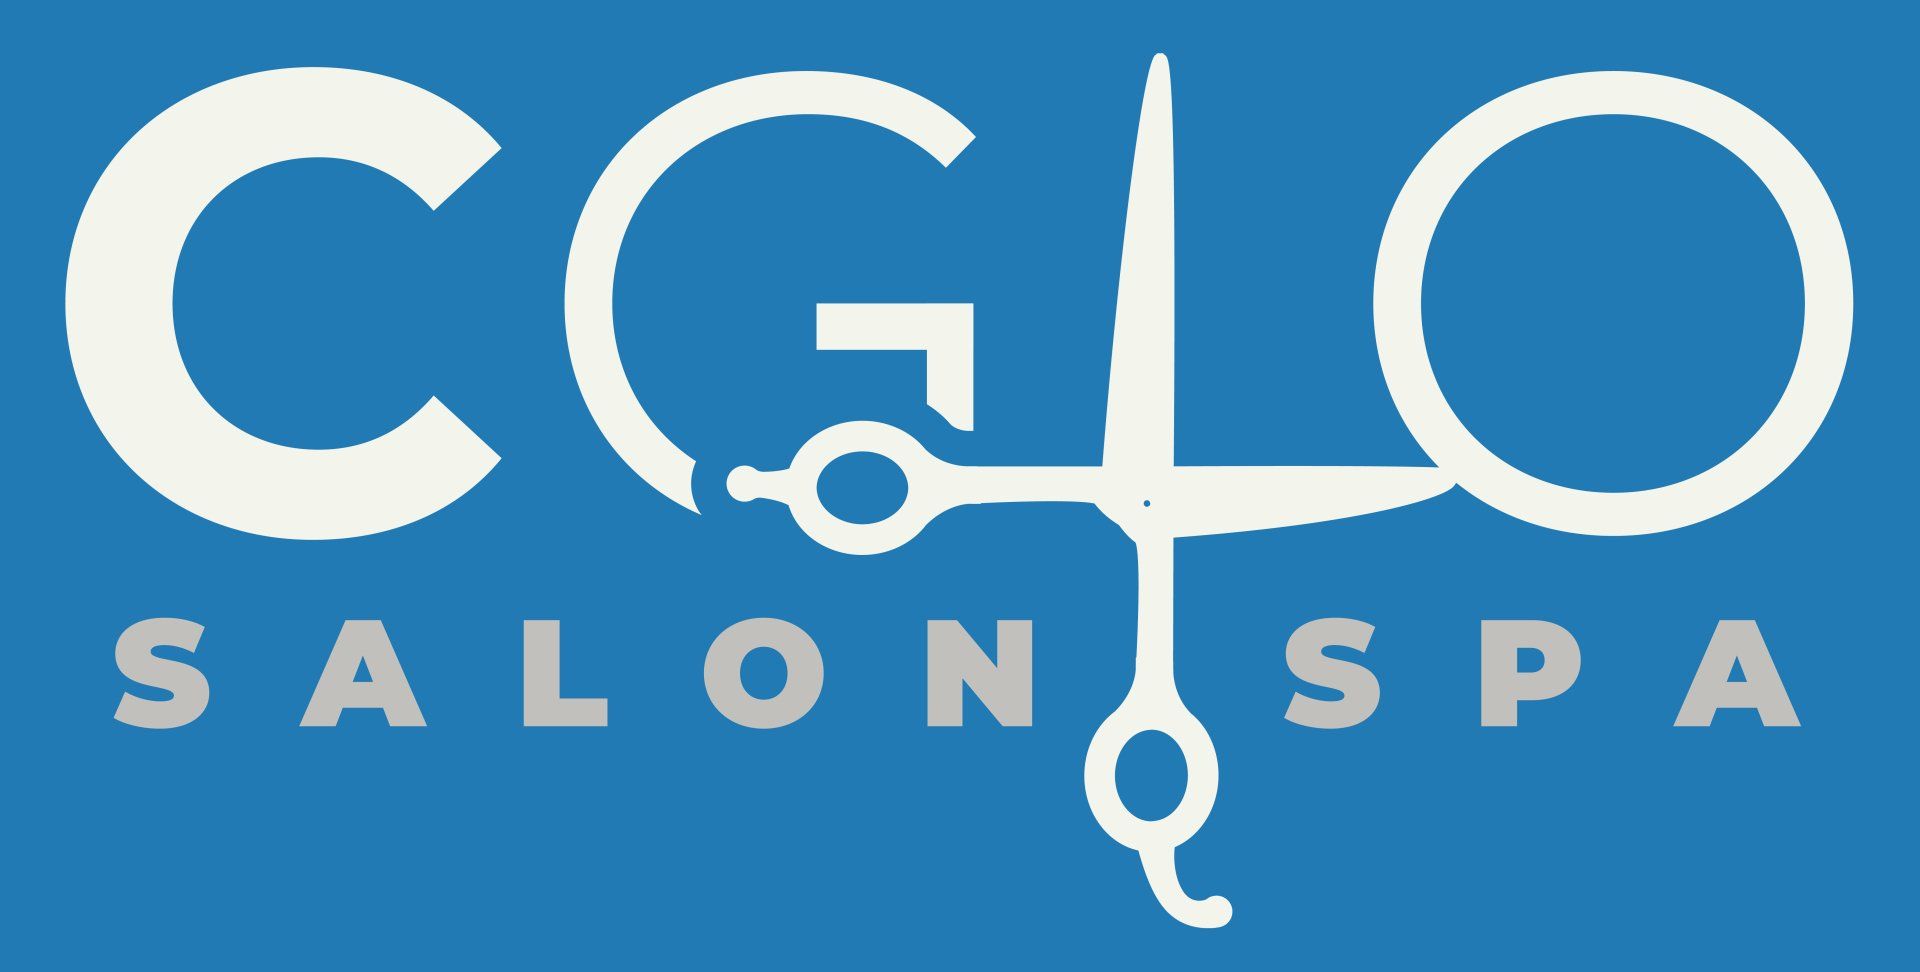 C Glo Salon Spa